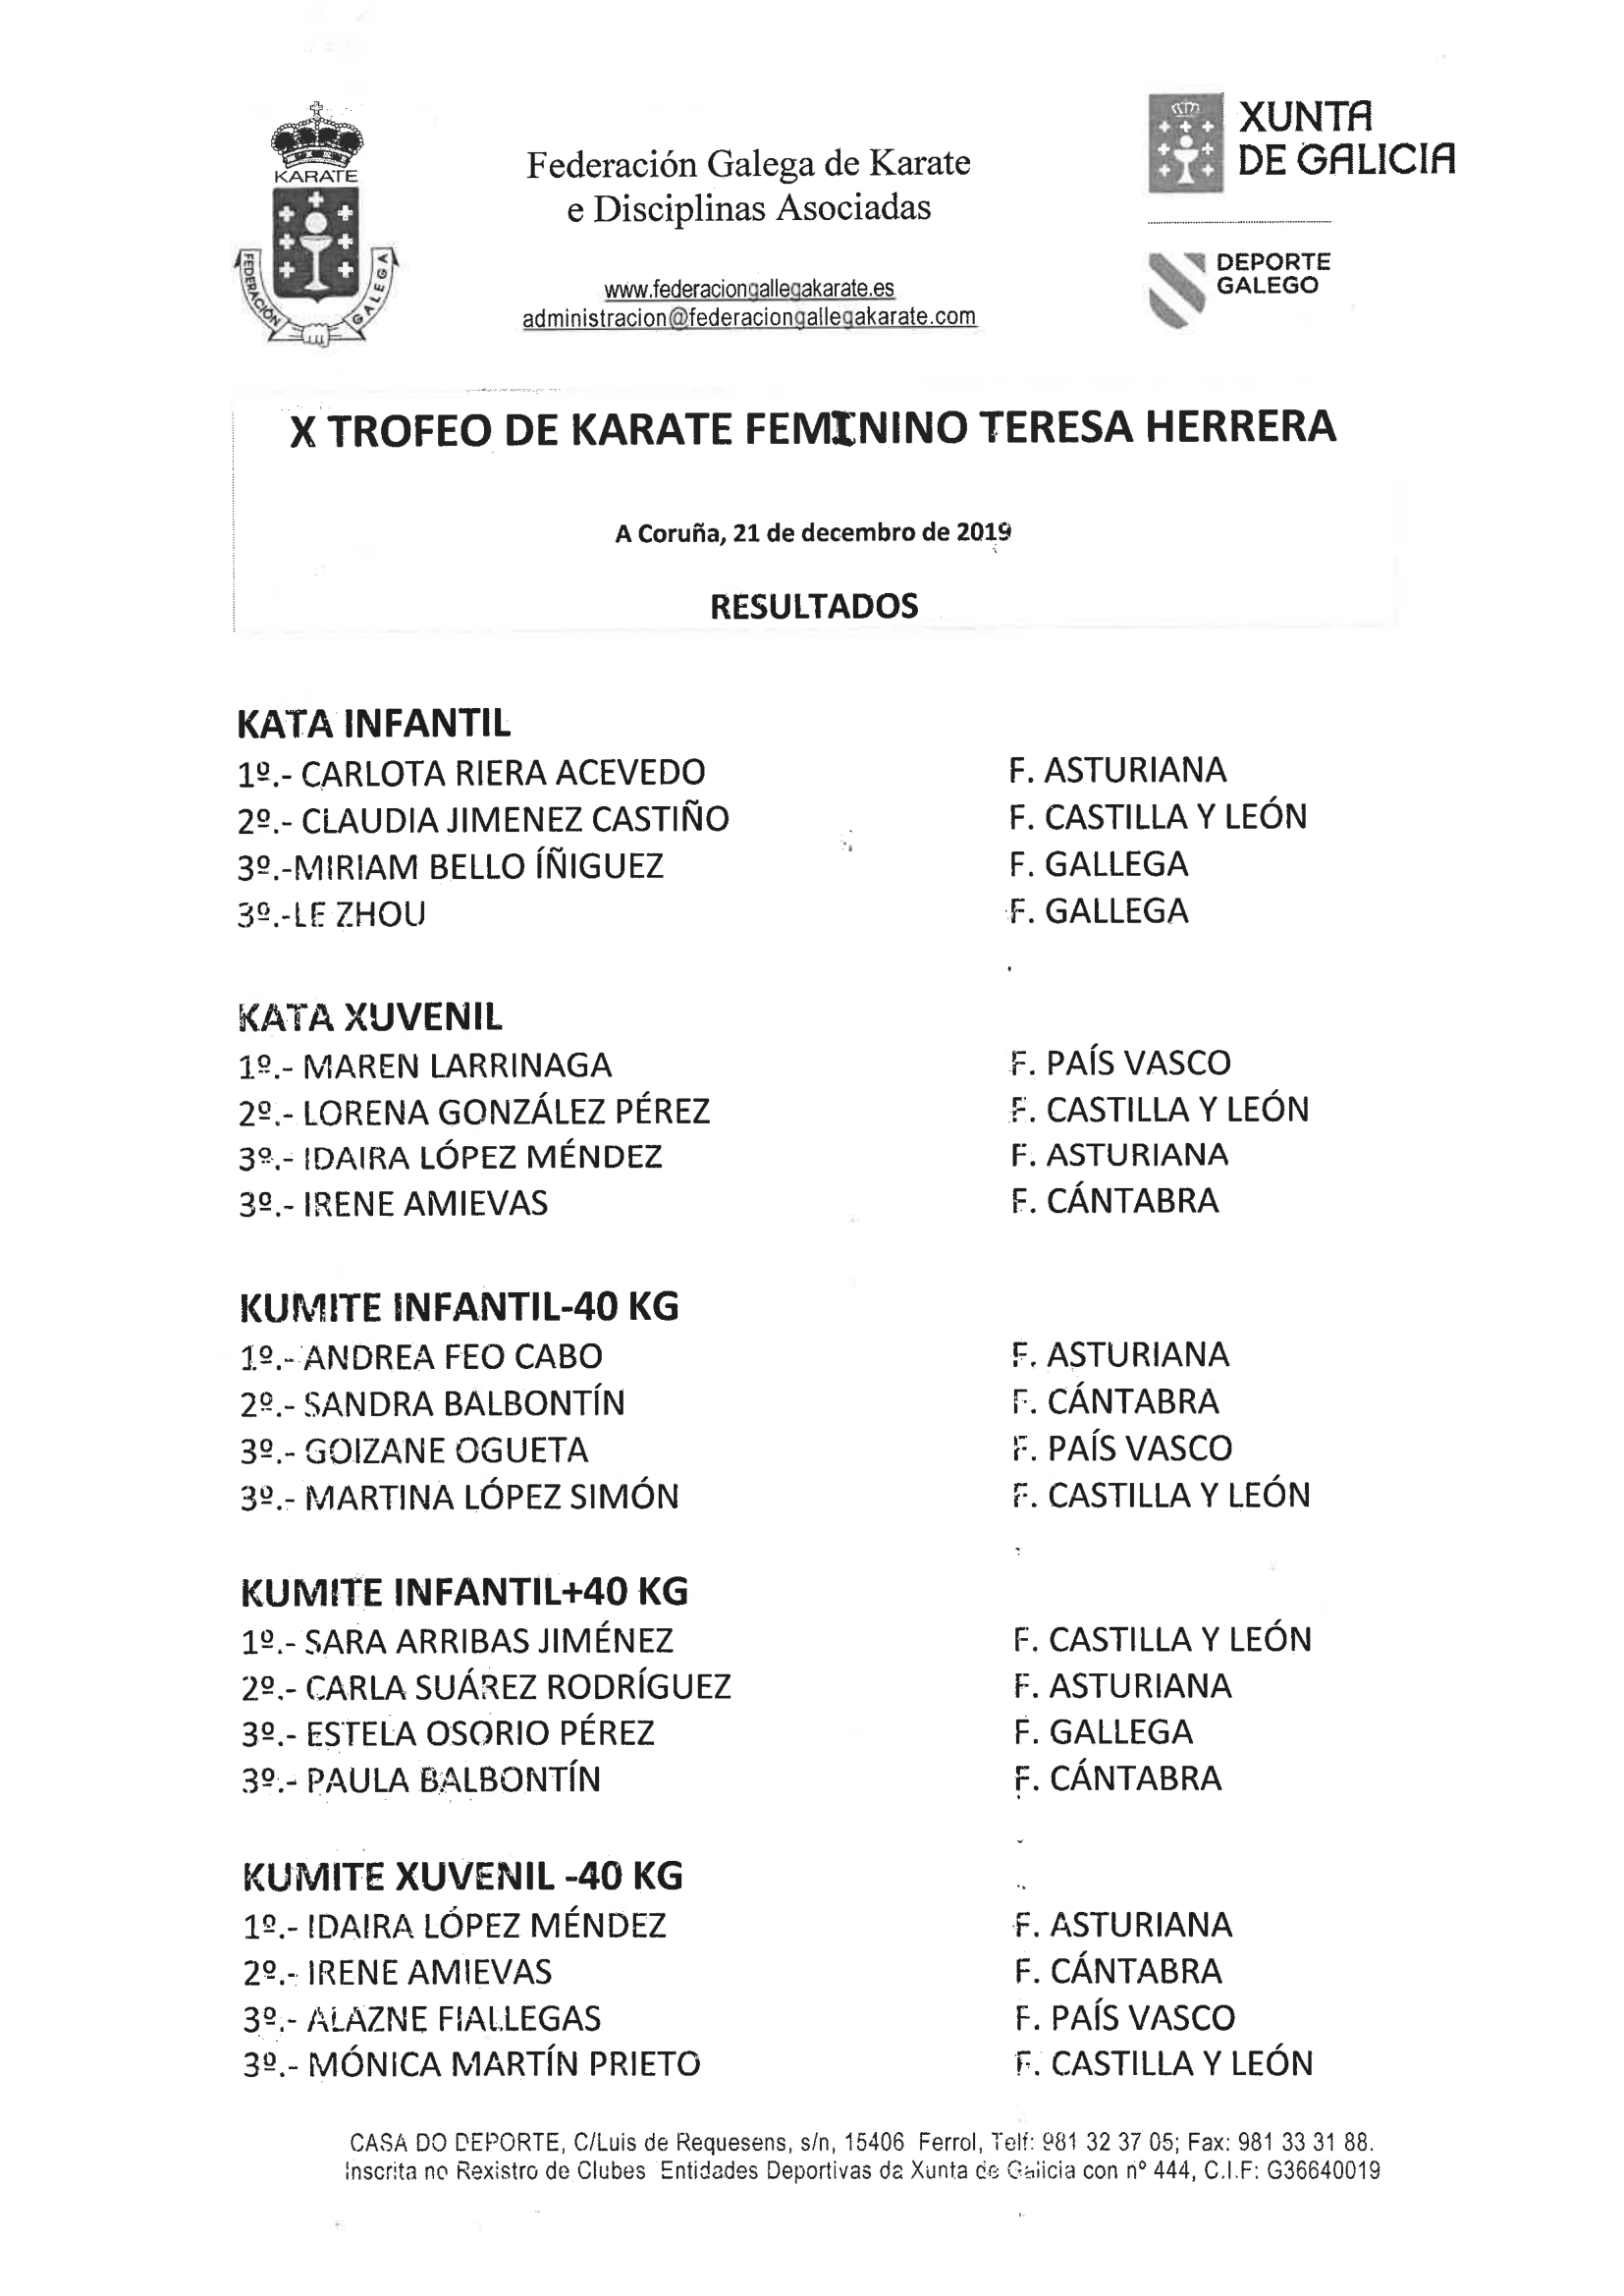 Resultados X Trofeo Teresa Herrera de Karate Feminino